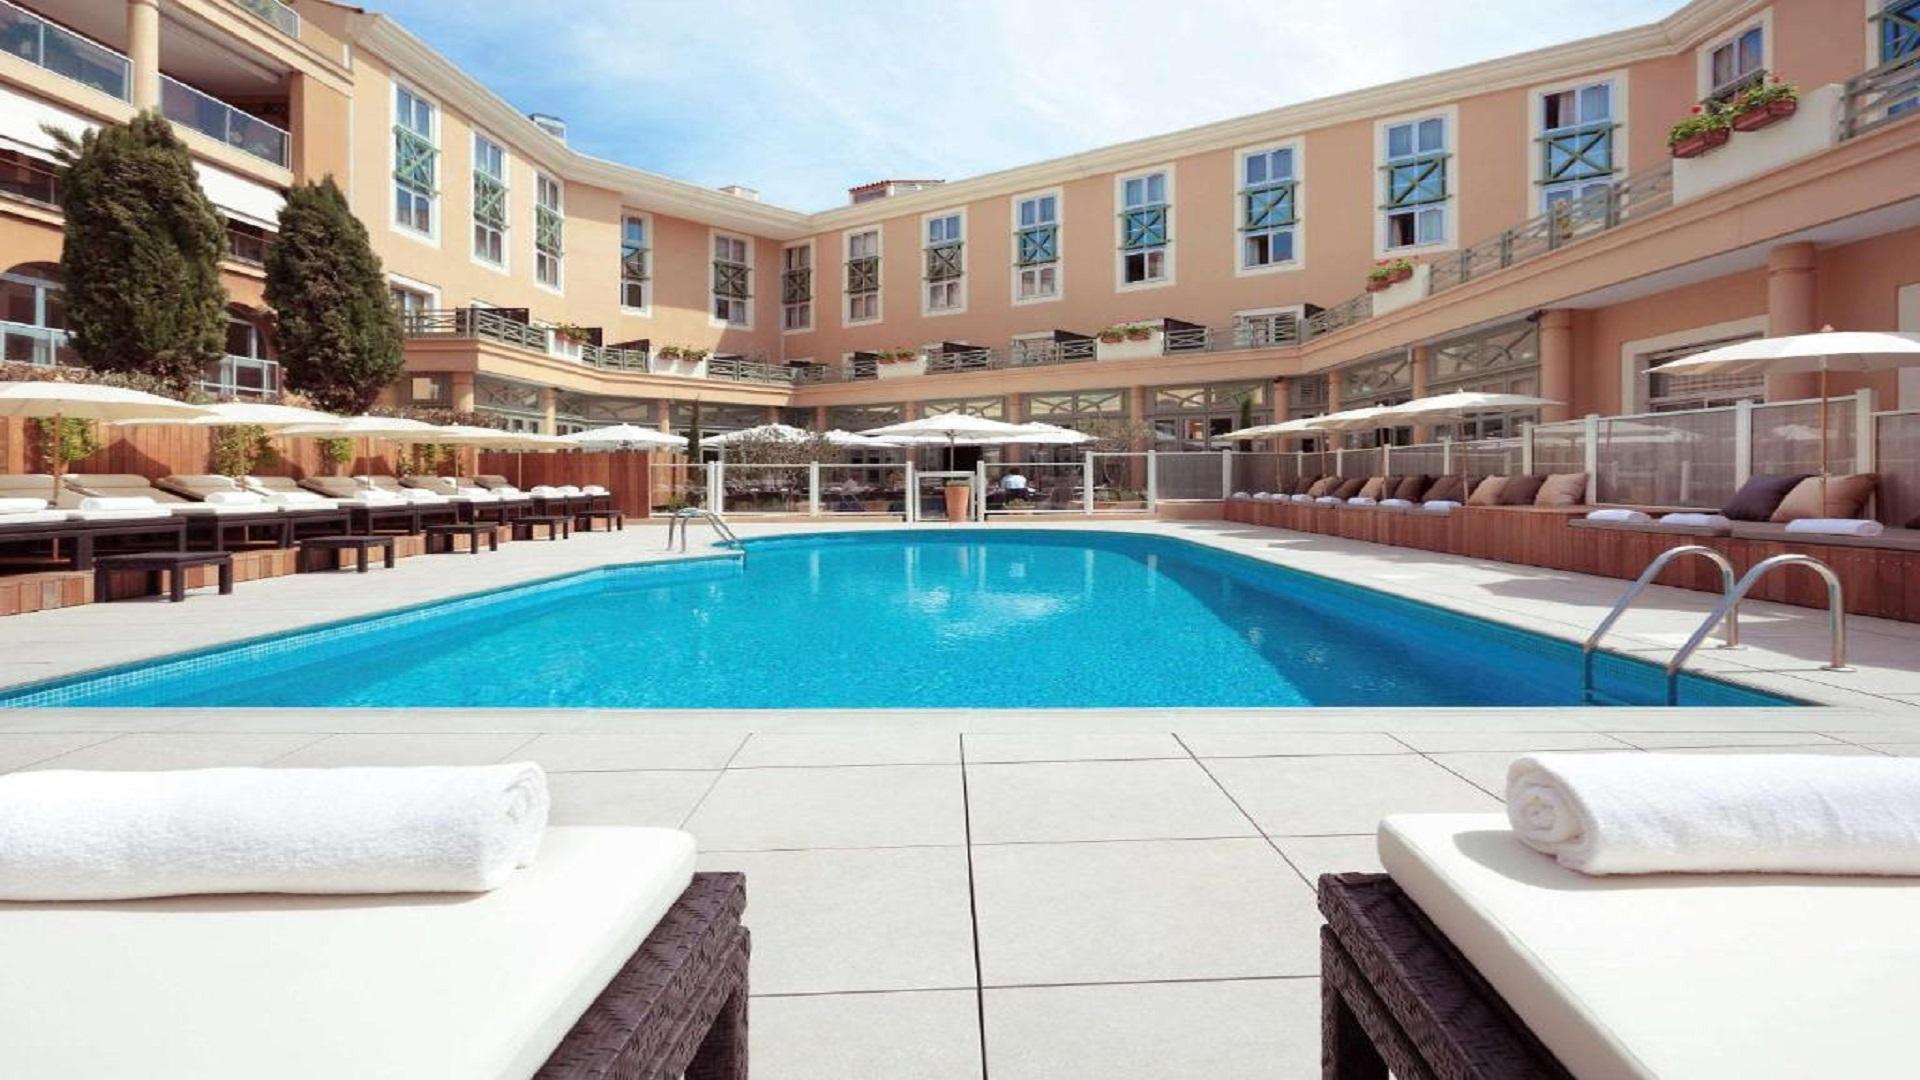 grand-hotel-roi-rene-aix-en-provence-paca-luberon-piscine-seminaires-de-caractere.jpg